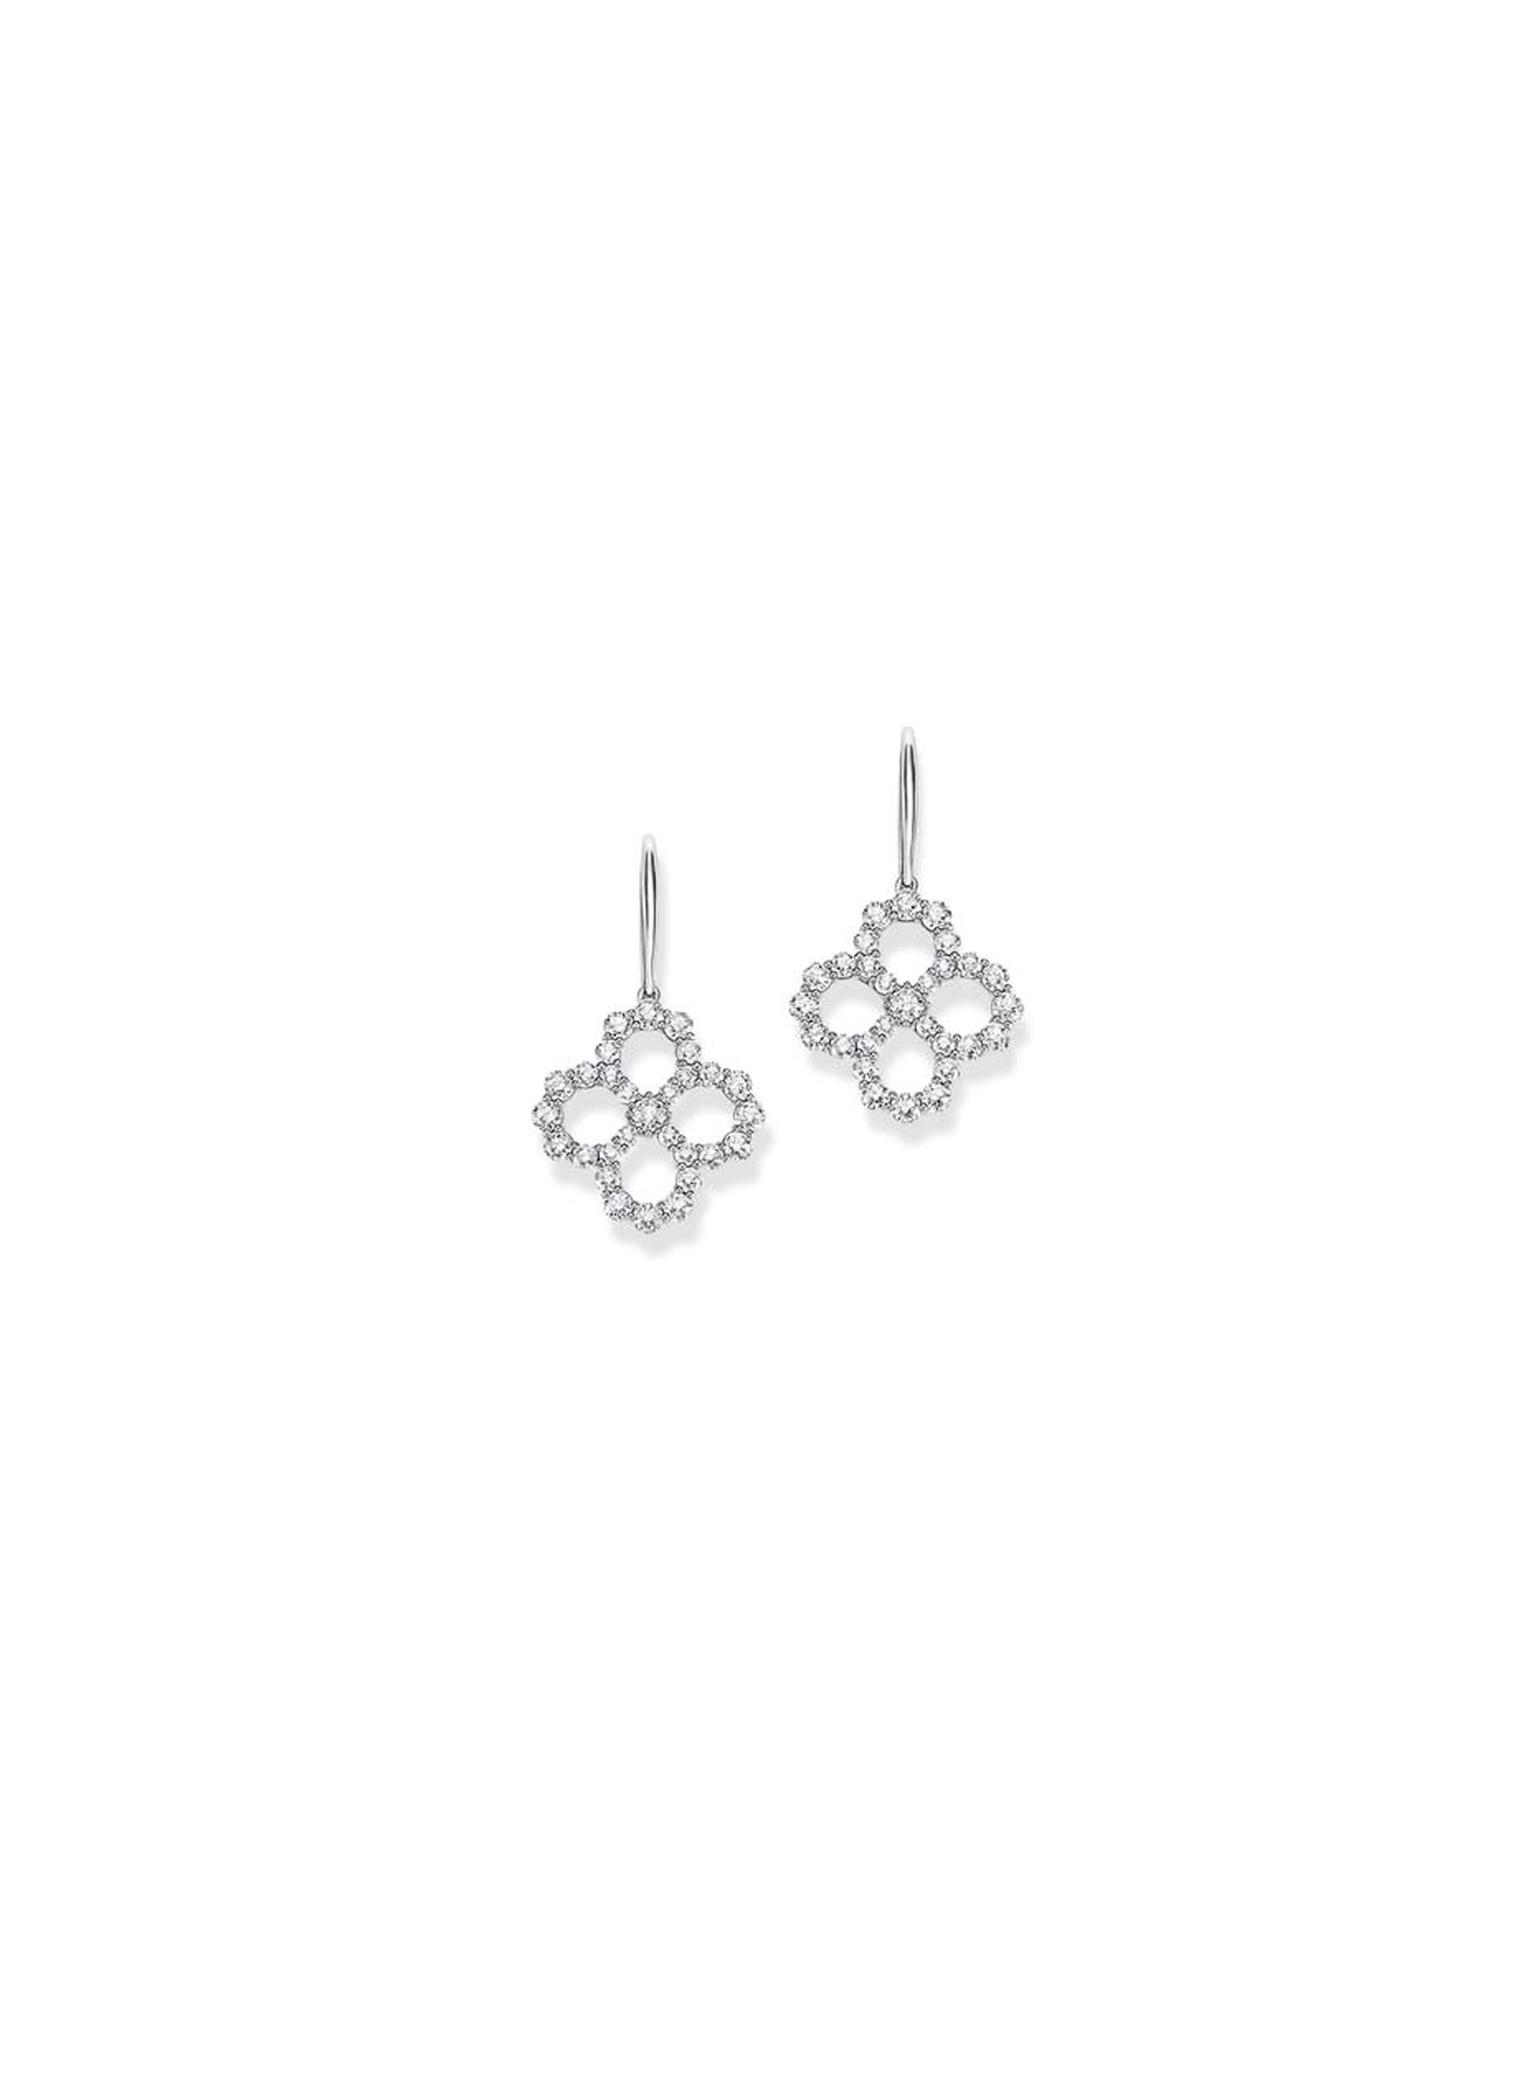 Harry Winston platinum Diamond Loop collection drop earrings.